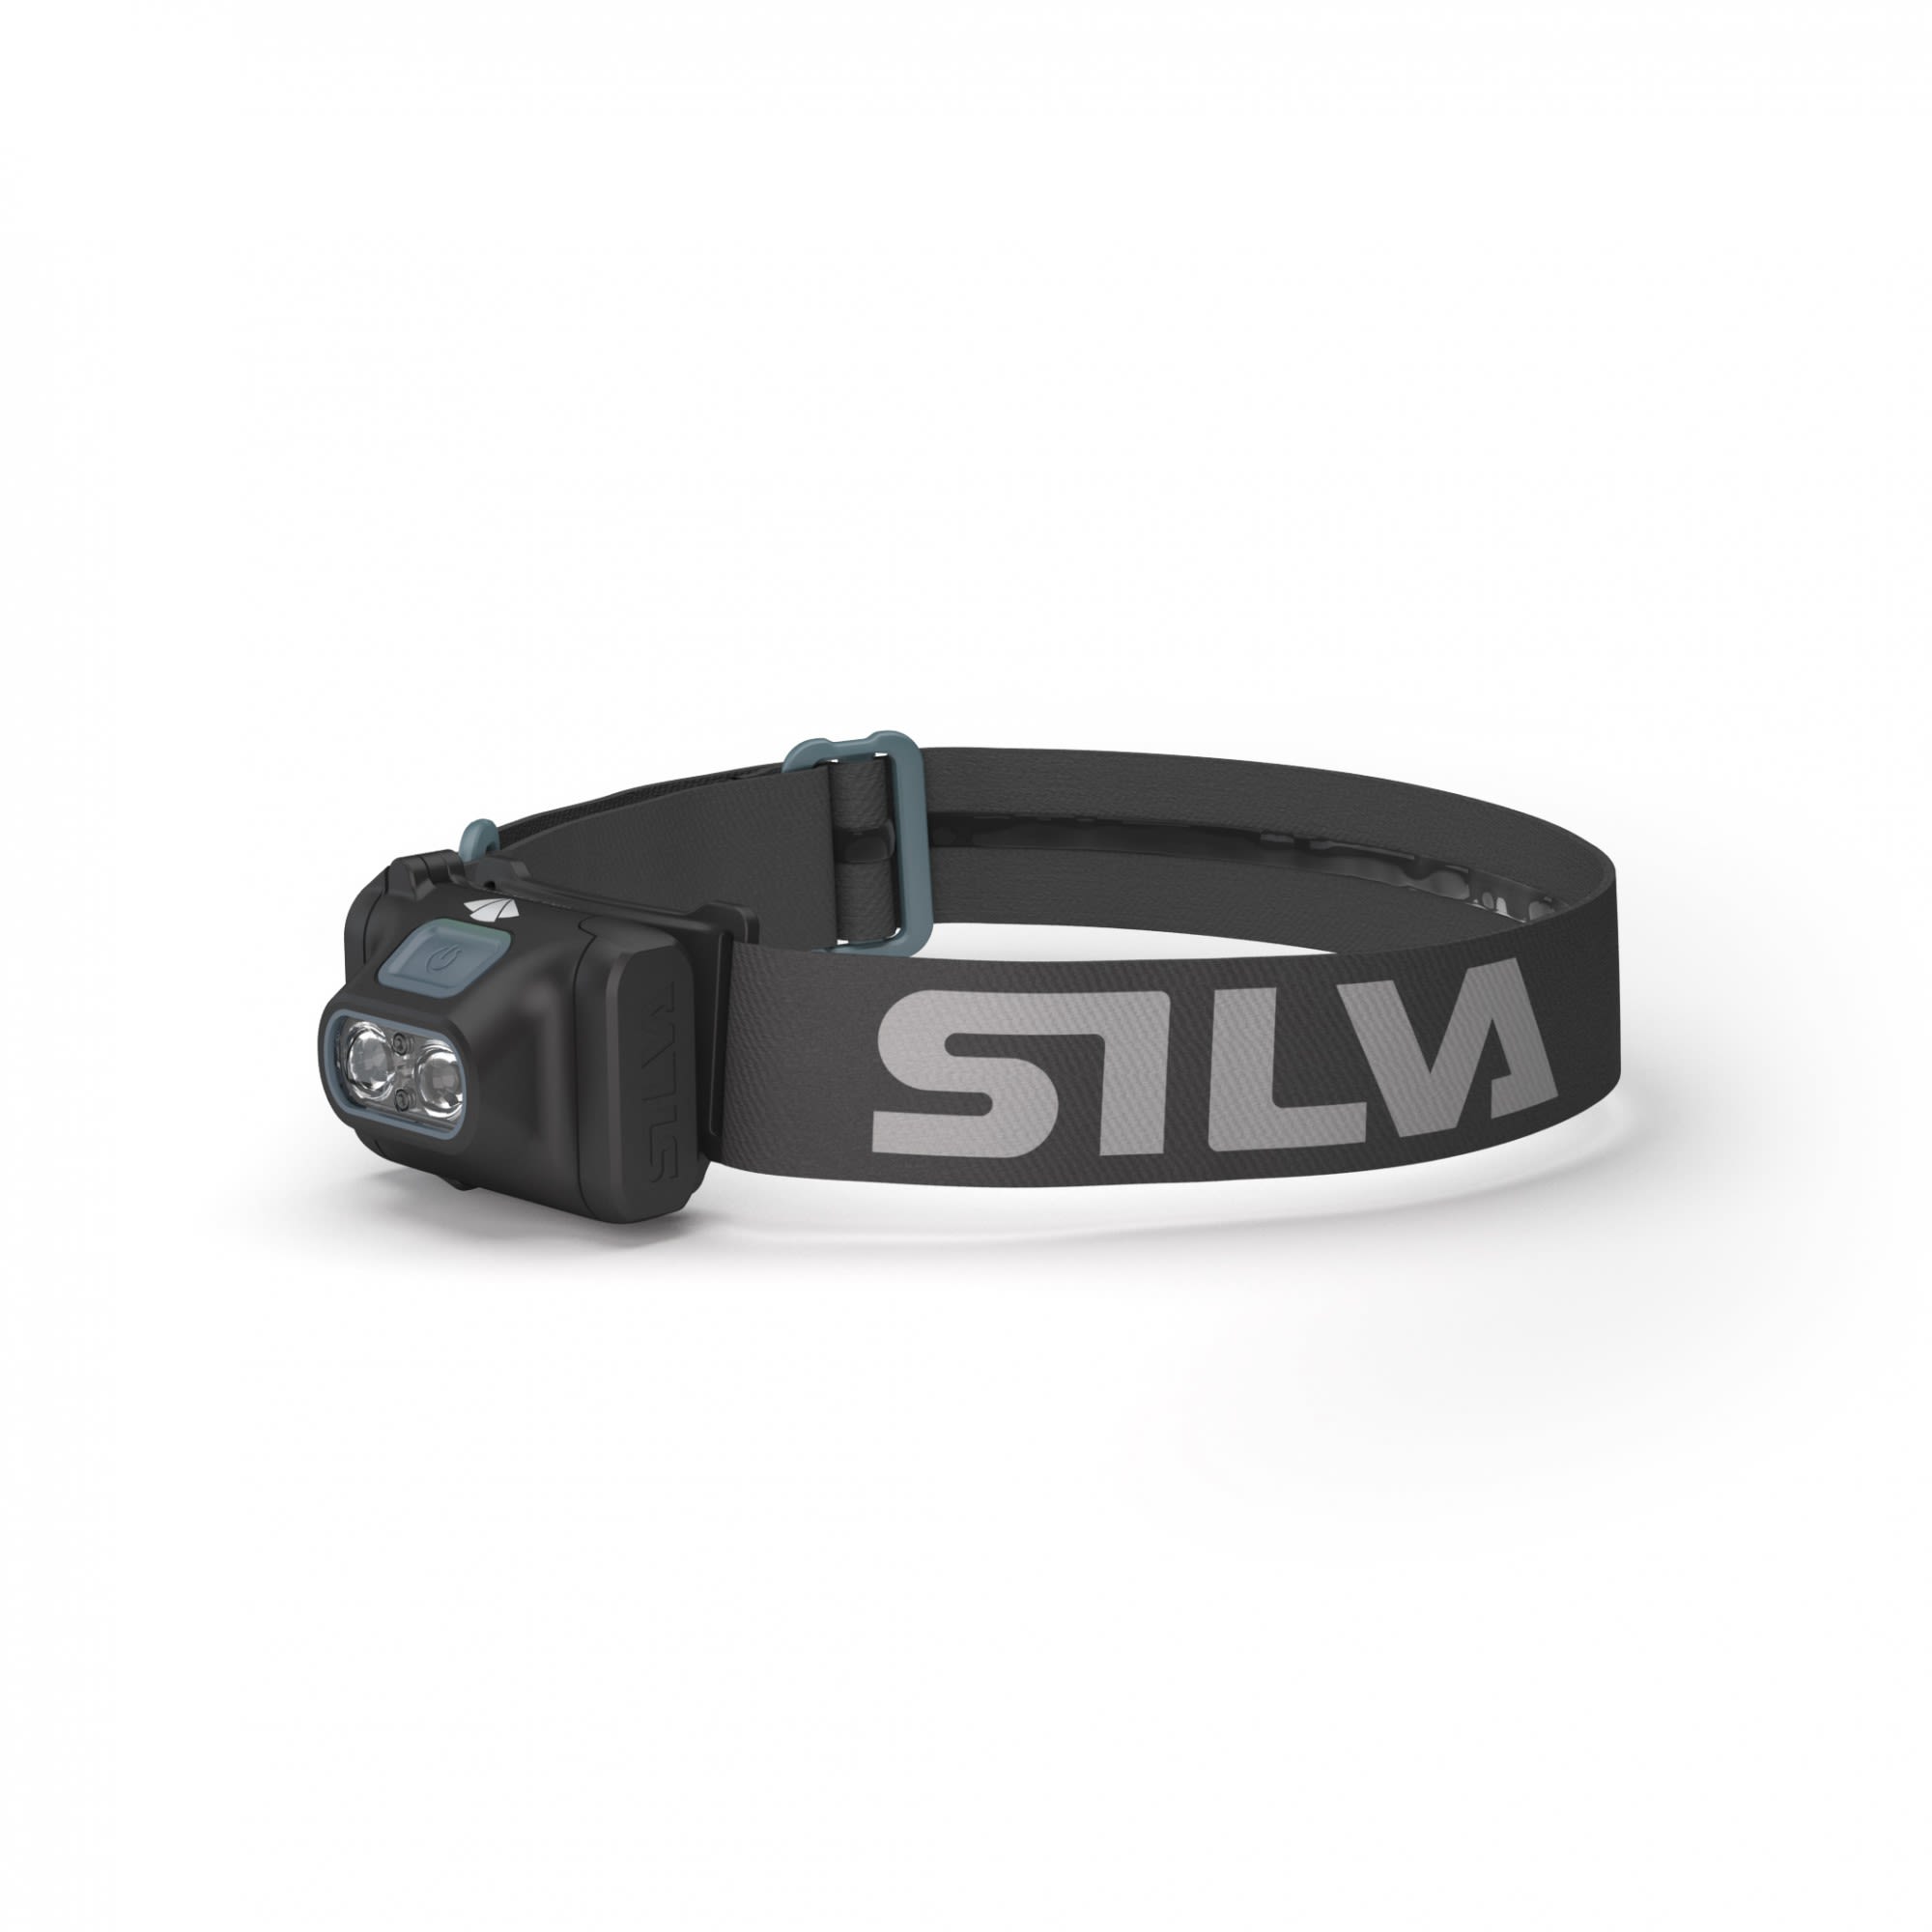 Silva Scout 3XT Schwarz- Stirnlampen- Grsse One Size - Farbe Black - Blue